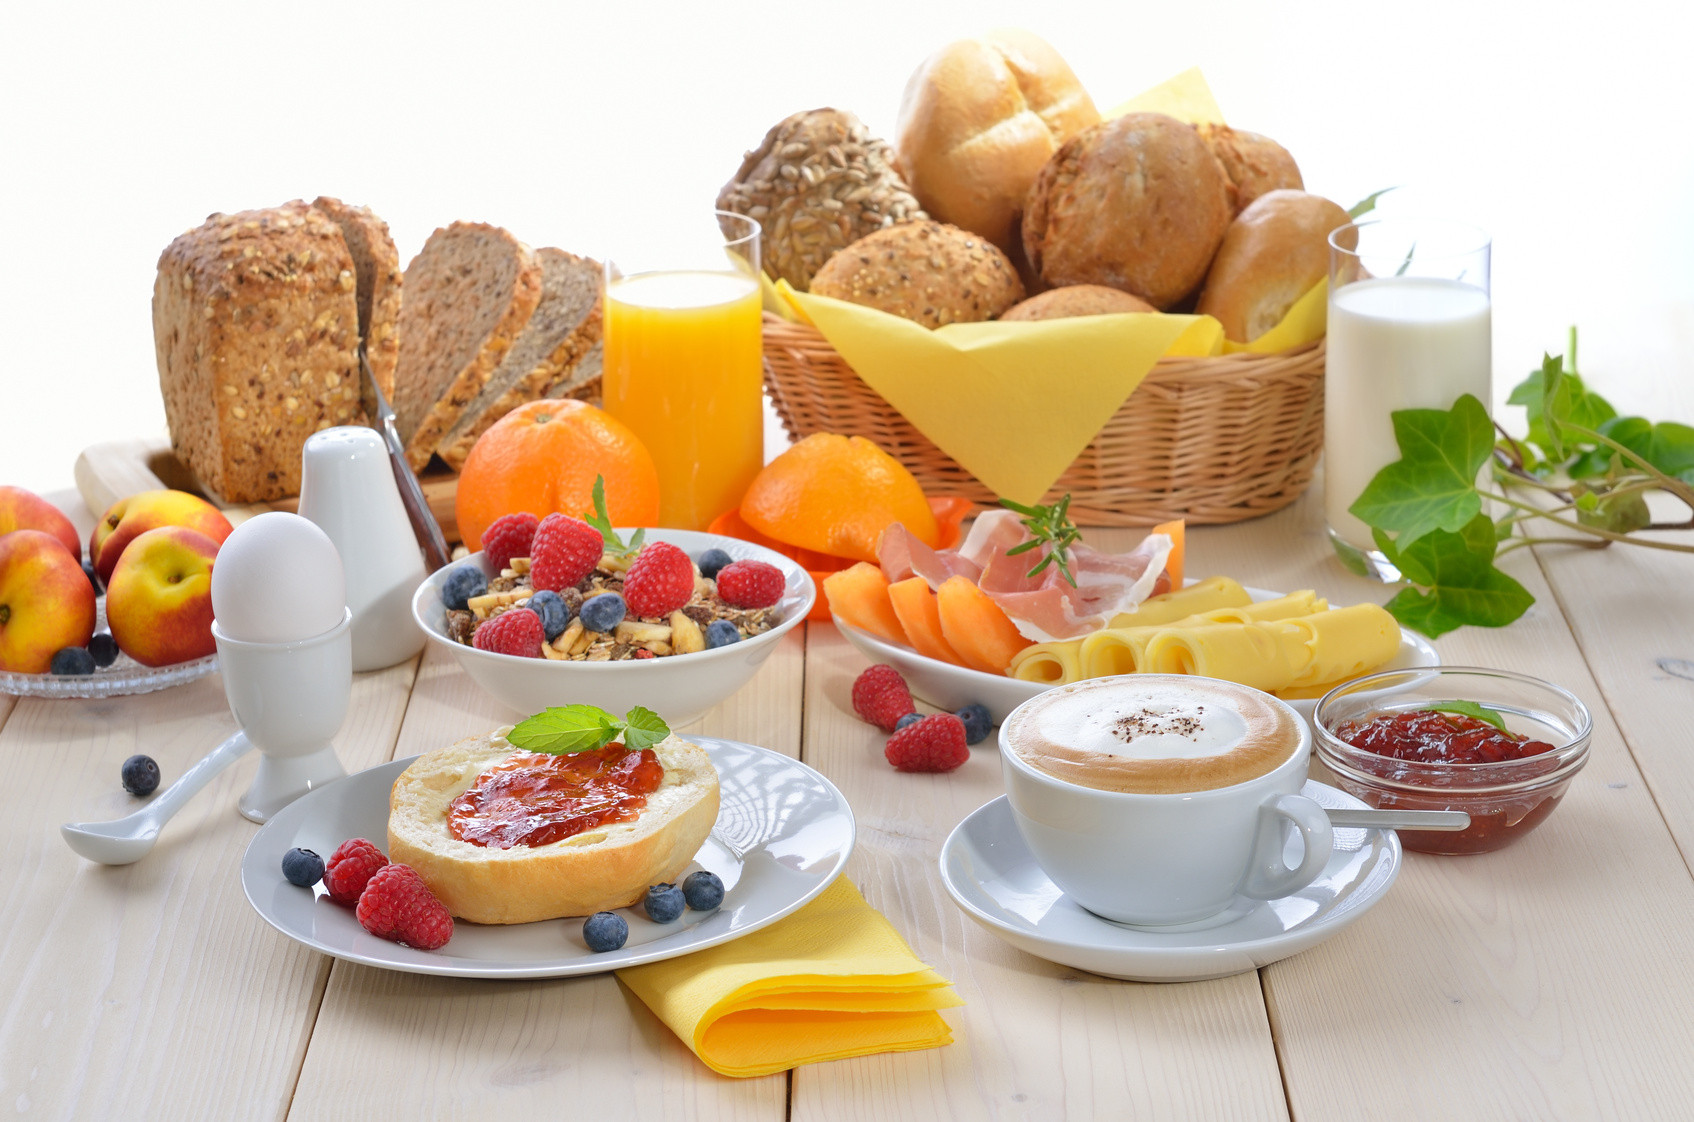 Healthy Breakfast Images
 Top 20 Healthy Breakfast Ideas For Winter eBlogfa